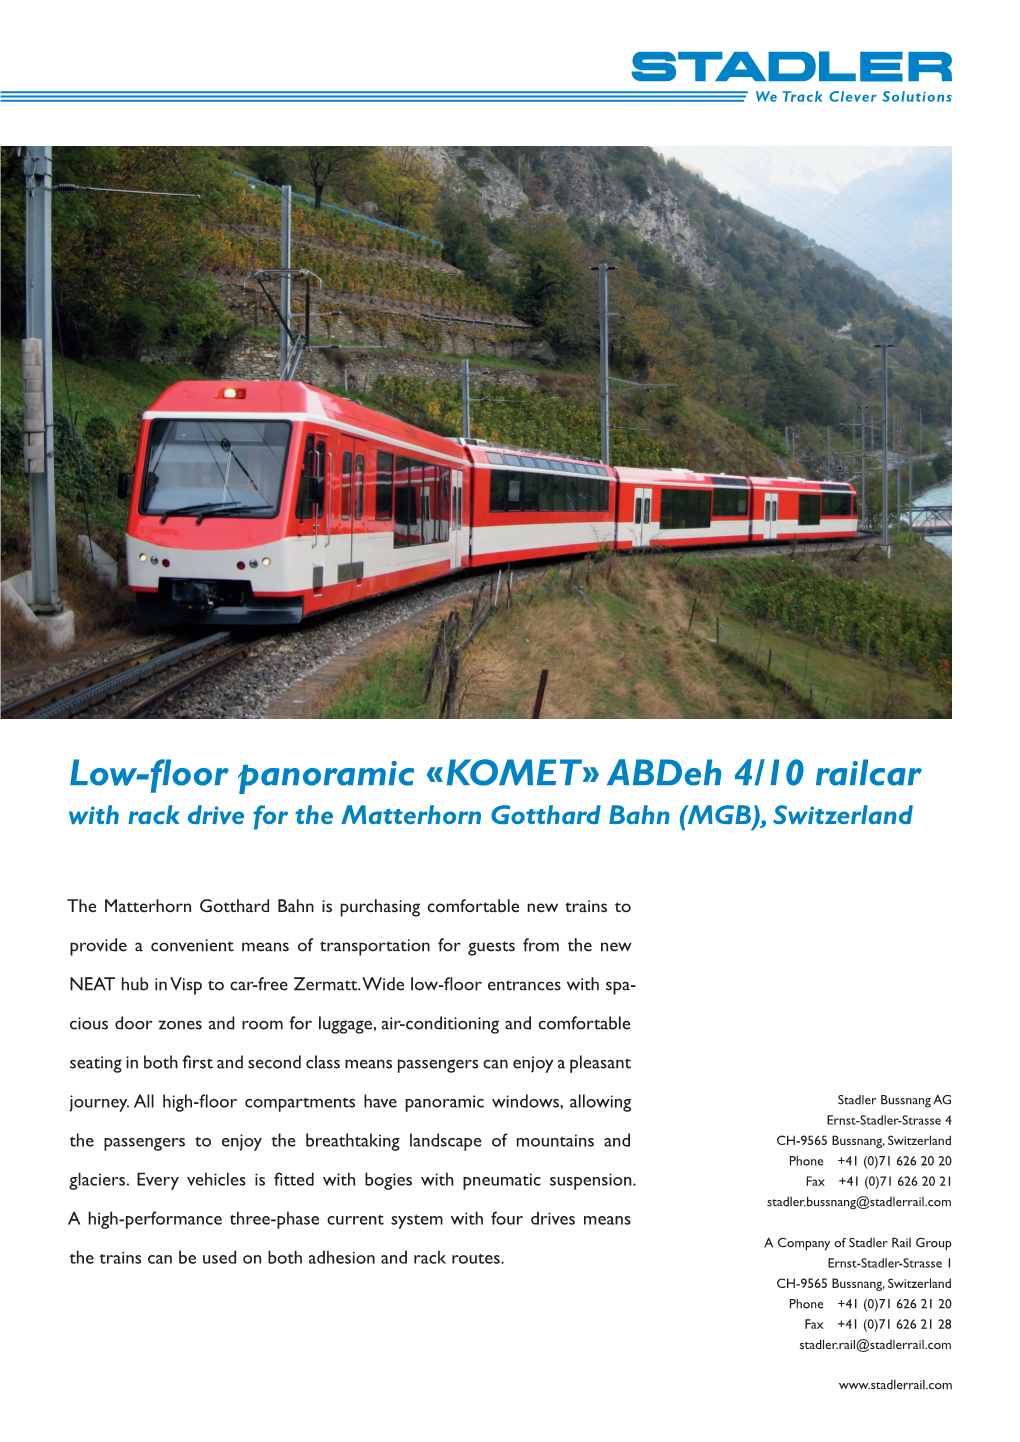 Low-Floor Panoramic «KOMET» Abdeh 4/10 Railcar with Rack Drive for the Matterhorn Gotthard Bahn (MGB), Switzerland